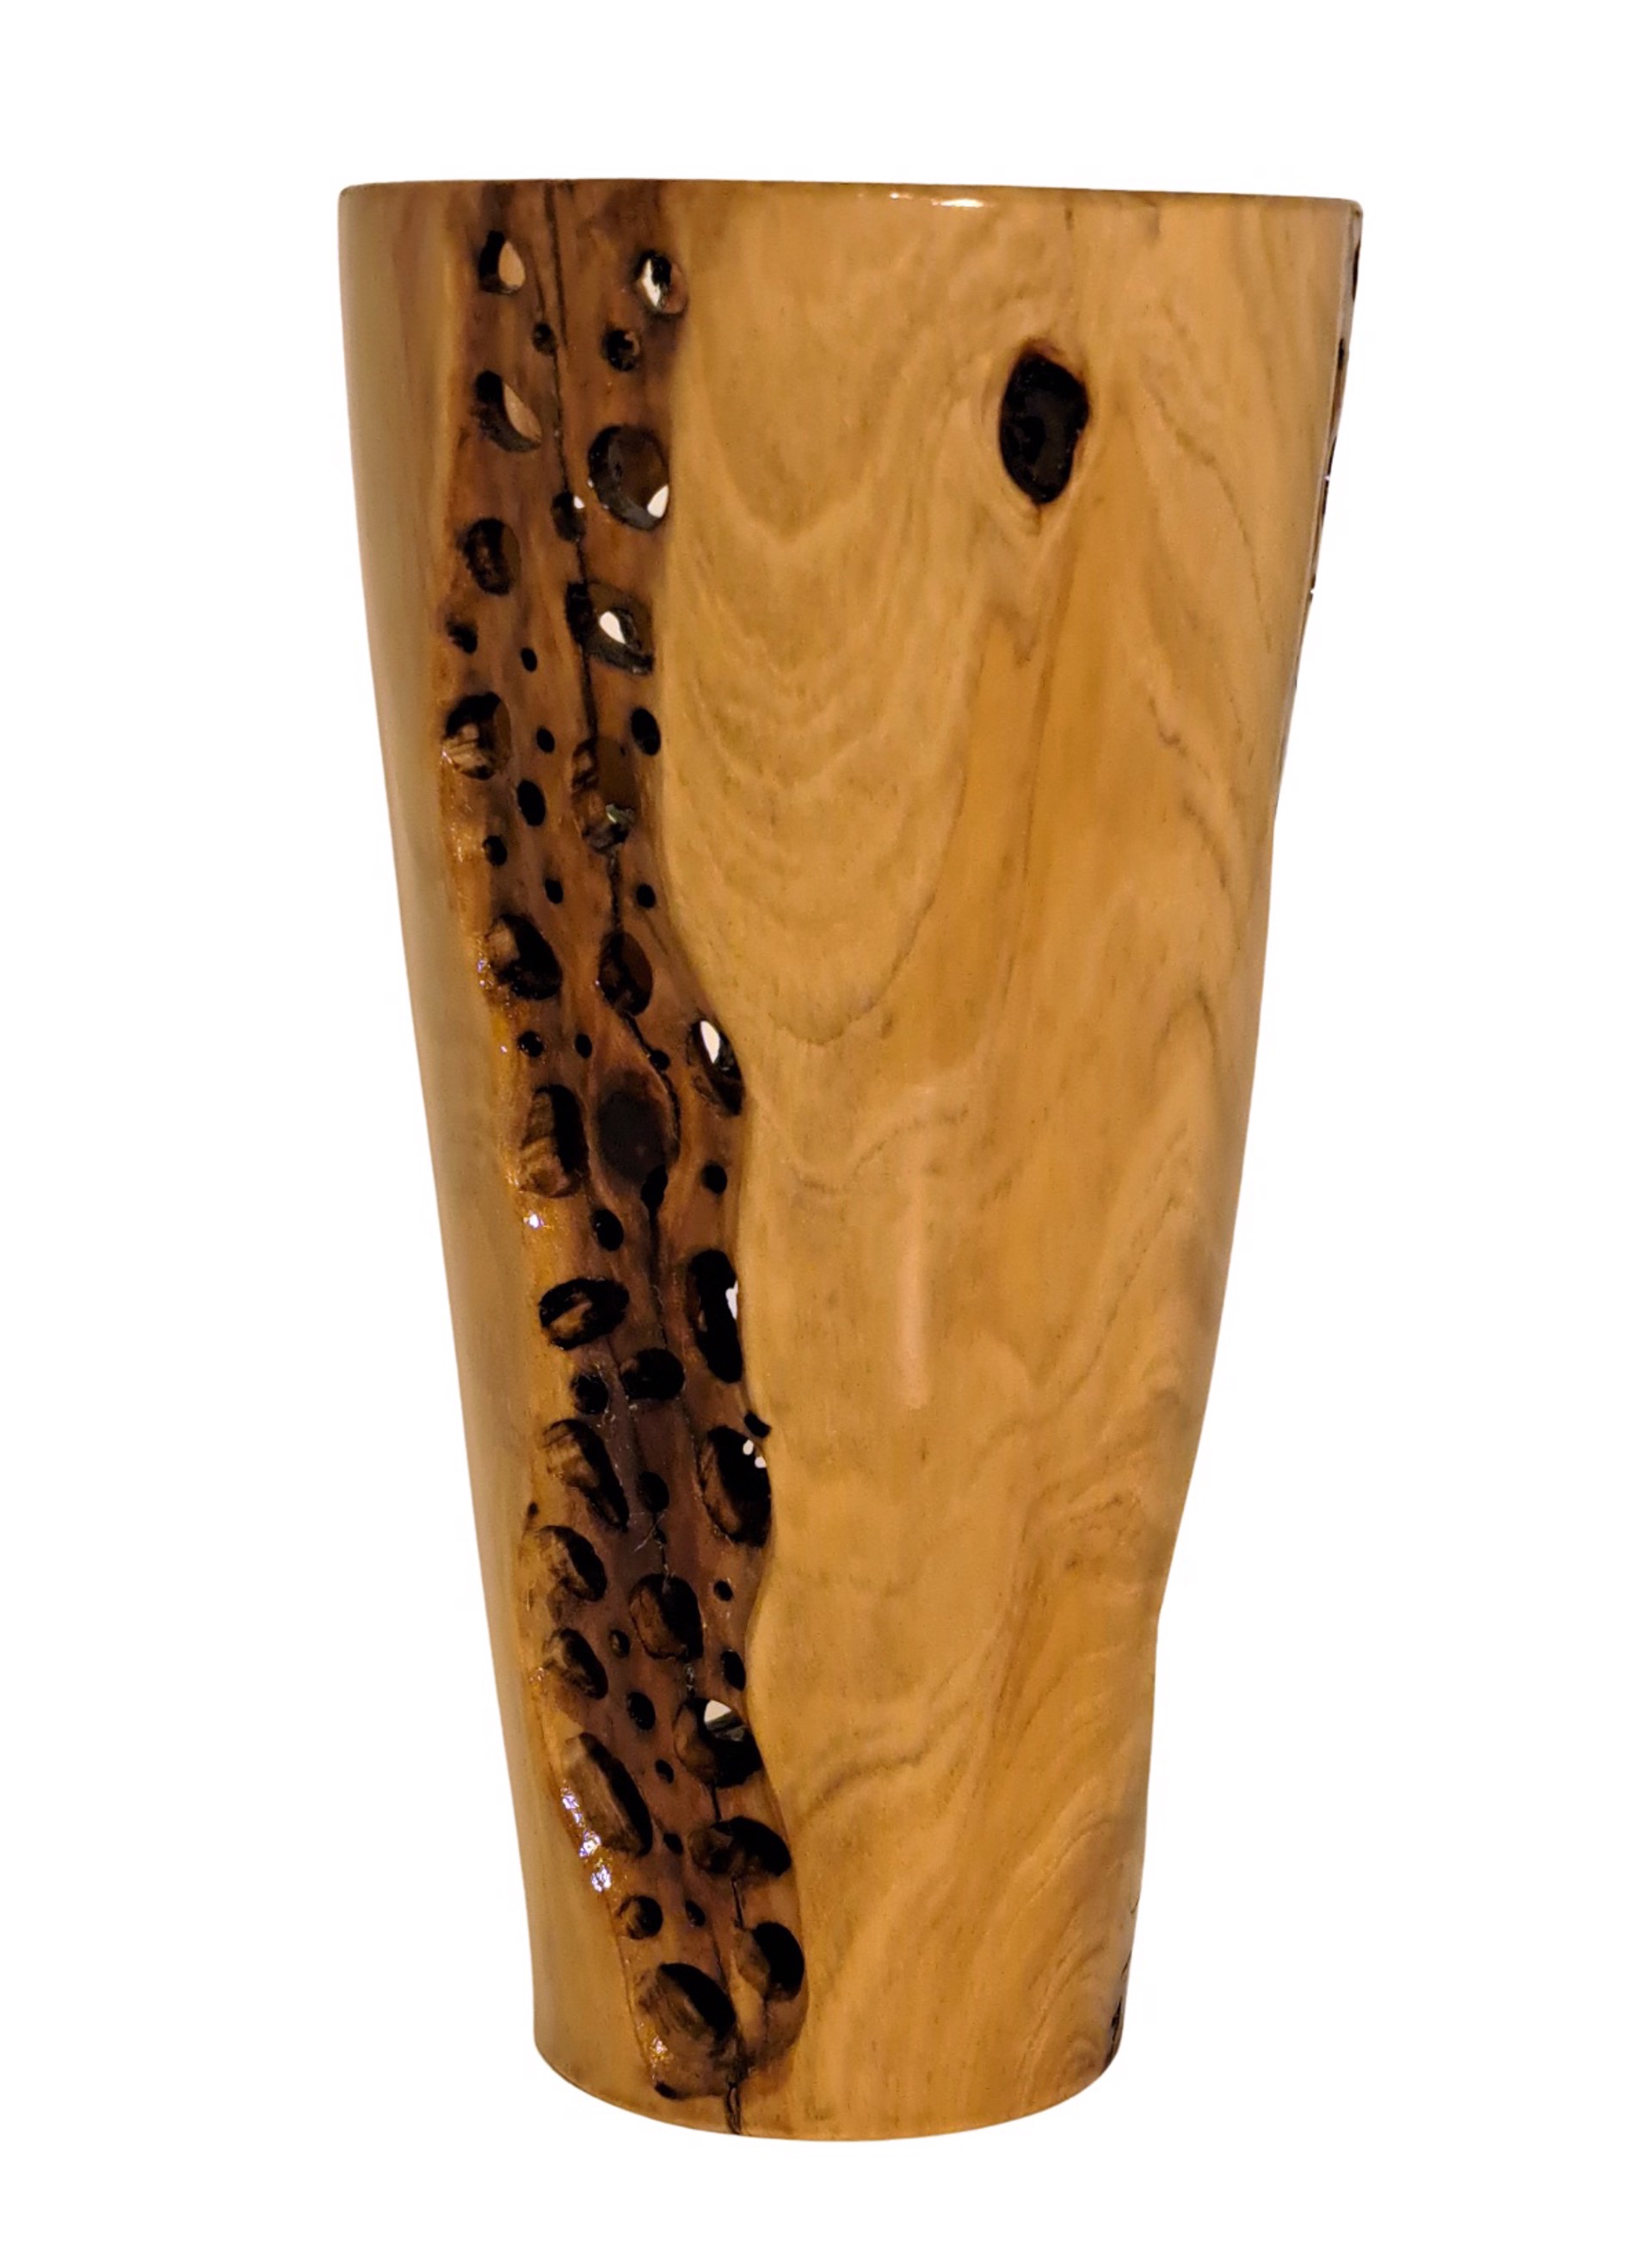 Yellow Pine - Distressed Vase by Jim Scott